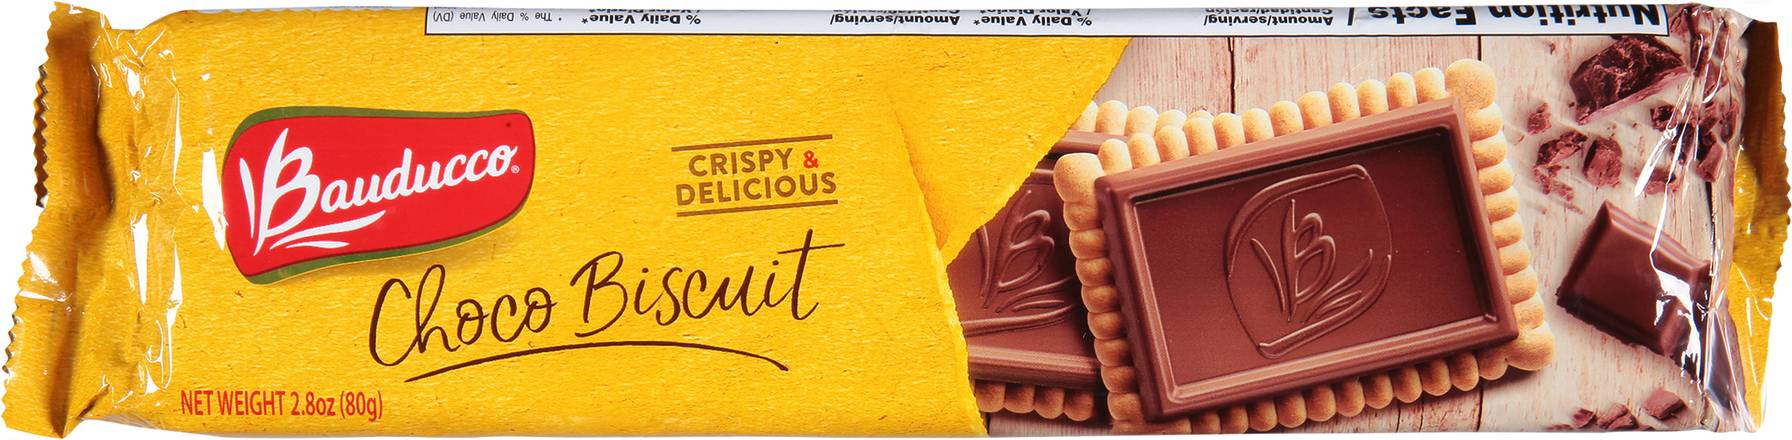 Bauducco Crispy & Delicious Choco Biscuit